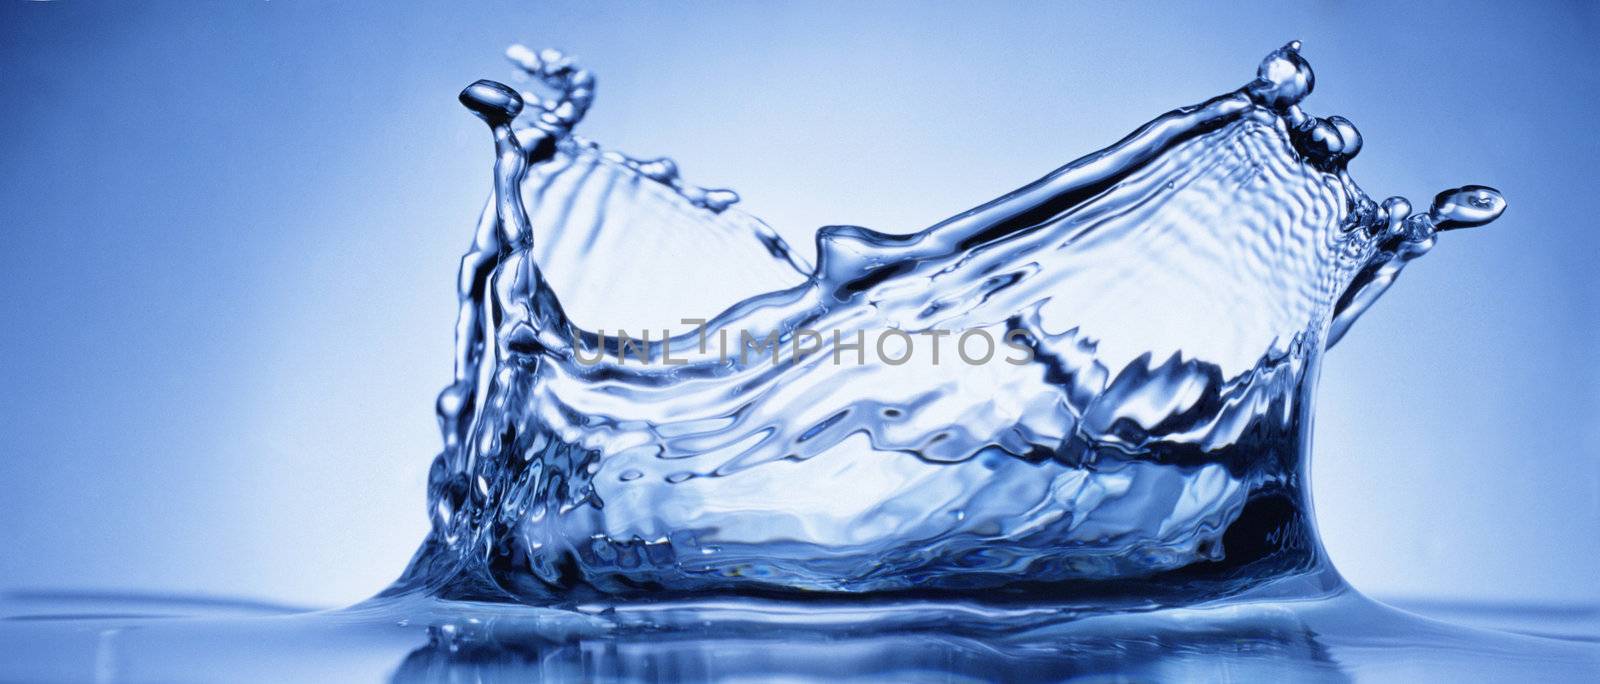 water splash isolated by ozaiachin